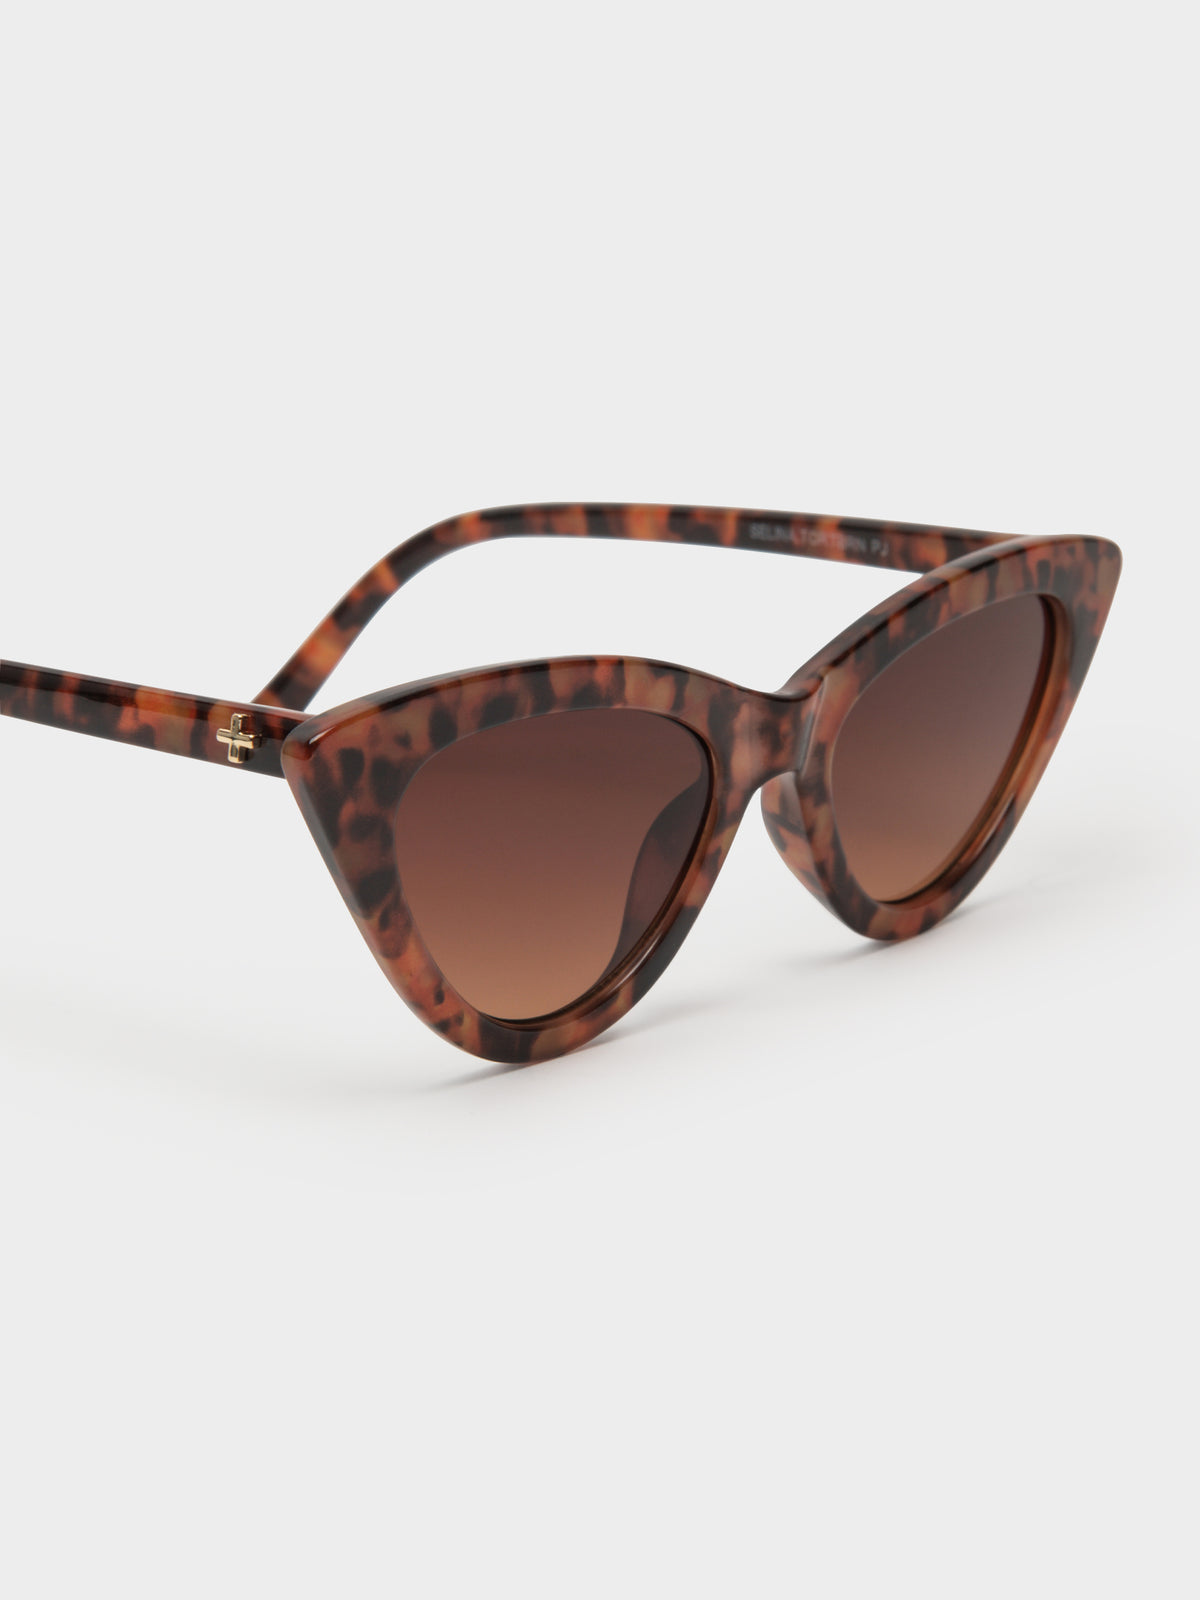 Selina Cat-Eye Sunglasses in Tortoiseshell